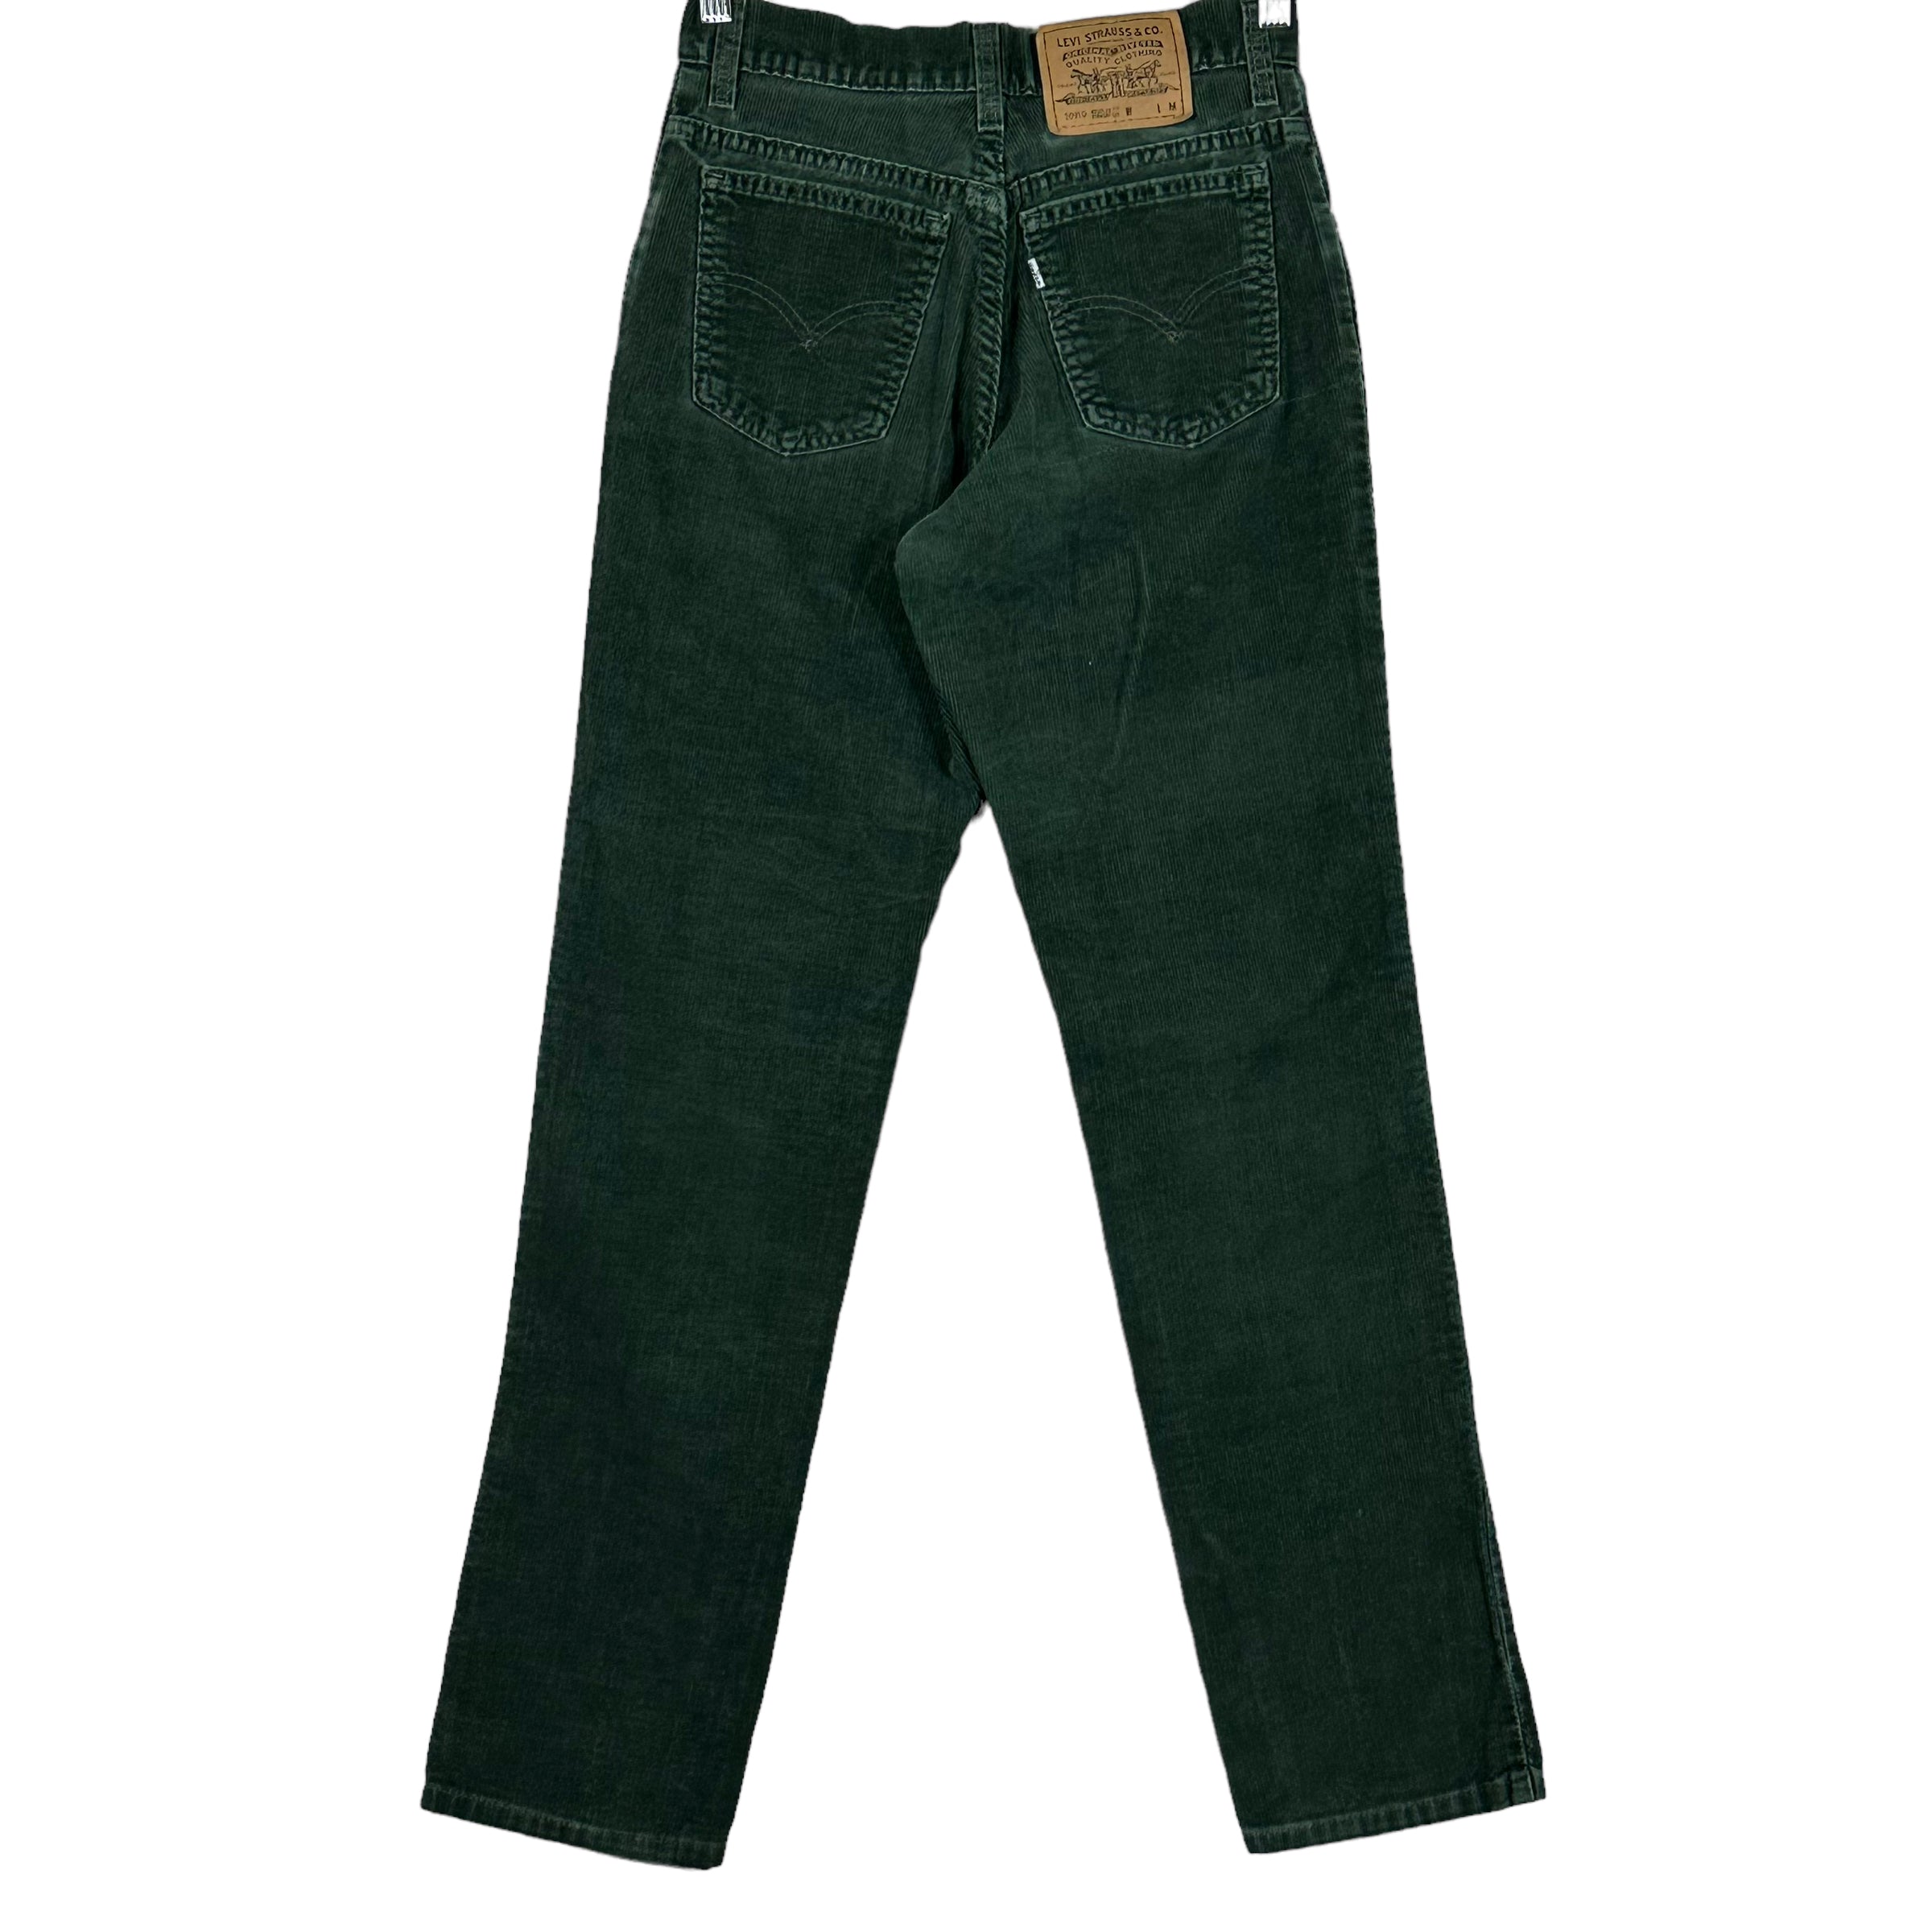 Vintage Levi's Corduroy Skinny Jeans 90s